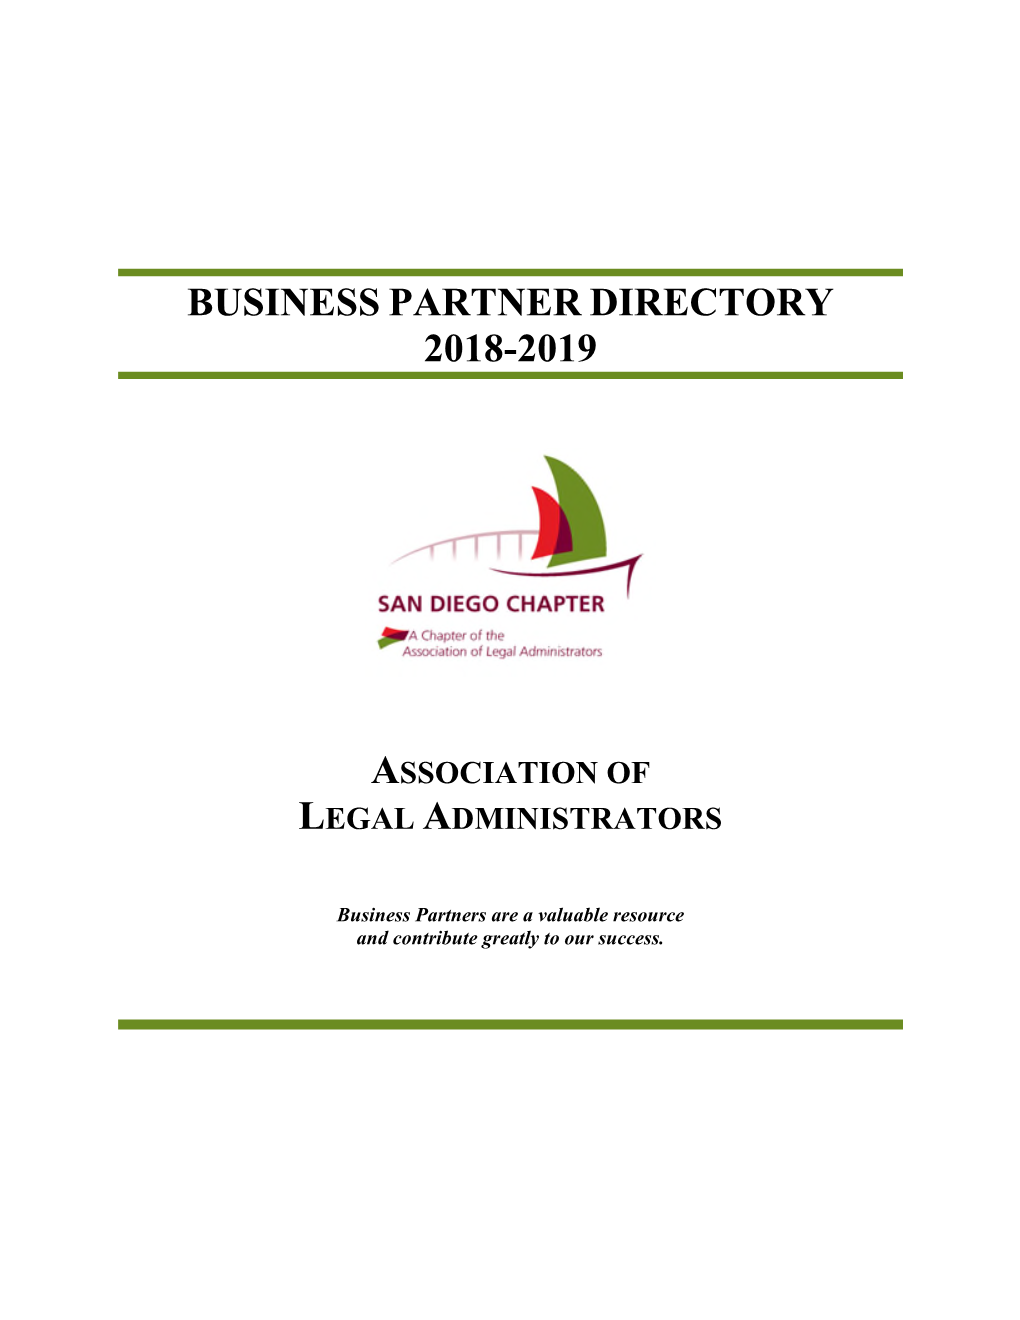 Business Partner Directory 2018-2019